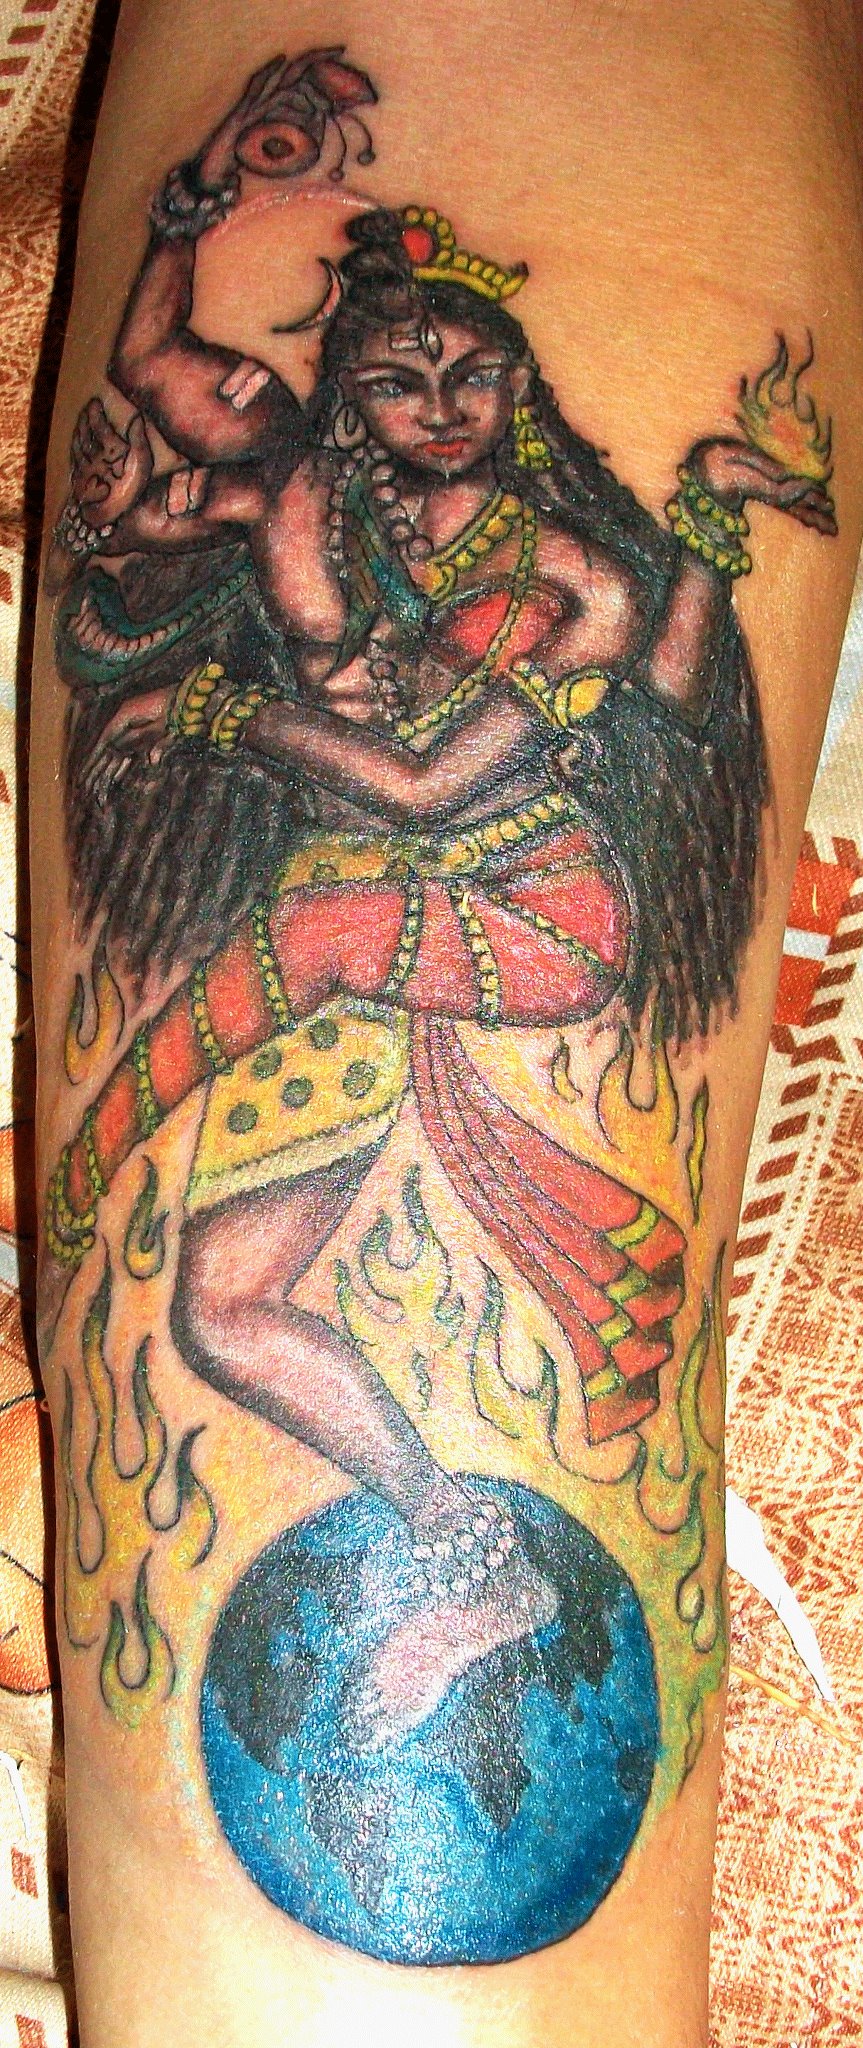 Simply Inked Buddha Temporary Tattoo, Designer Tattoo for Girls Boys Men  Women waterproof Sticker Size: 2.5 X 4 inch 1pc. l Black l 2g : Amazon.in:  Beauty